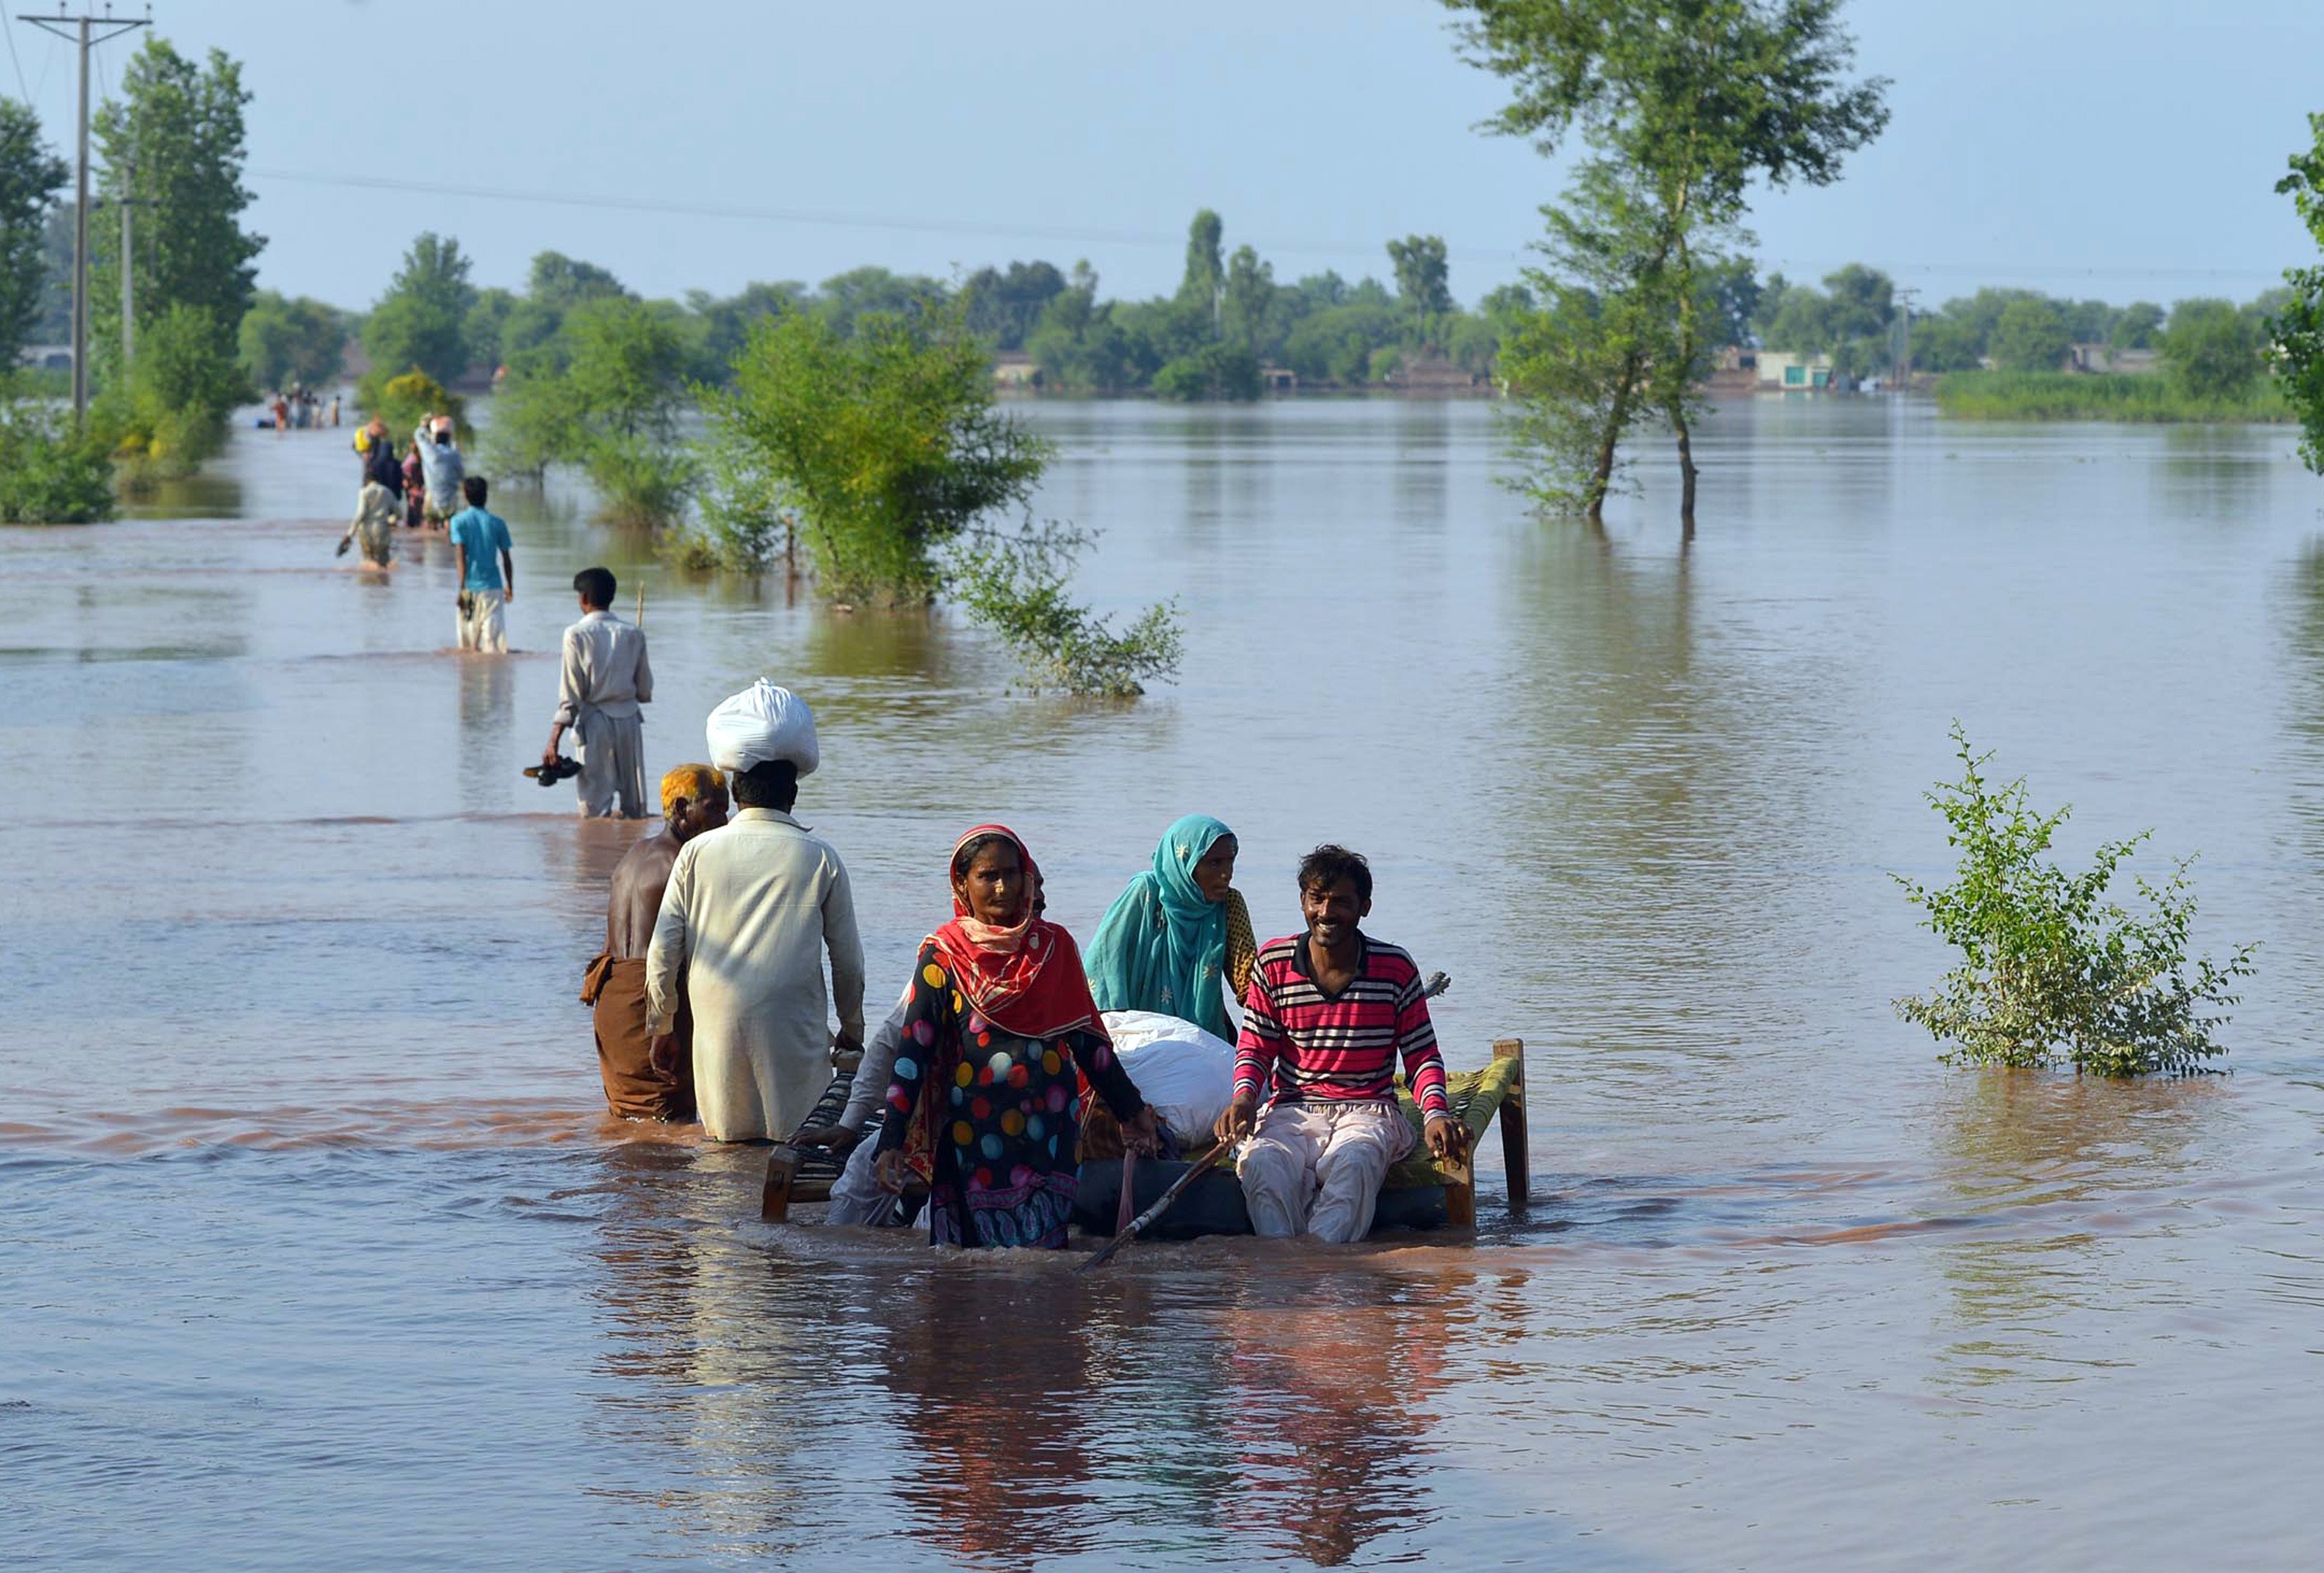 Kashmir flood waters hit Pakistan plains, thousands flee homes CBS News